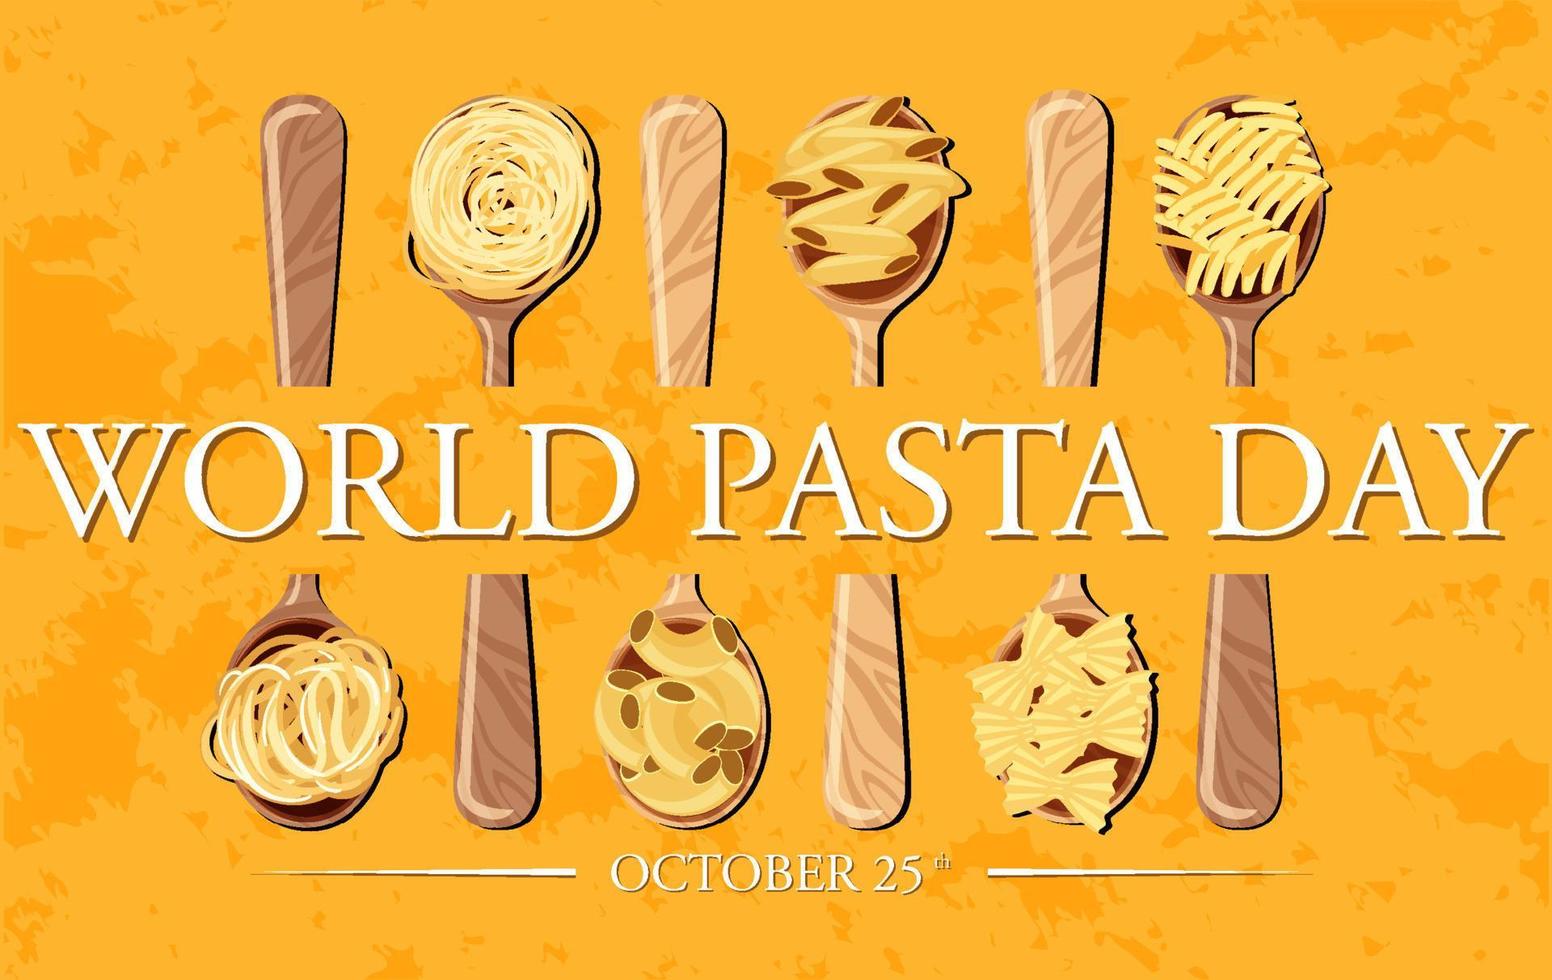 World Pasta Day Banner Design vector